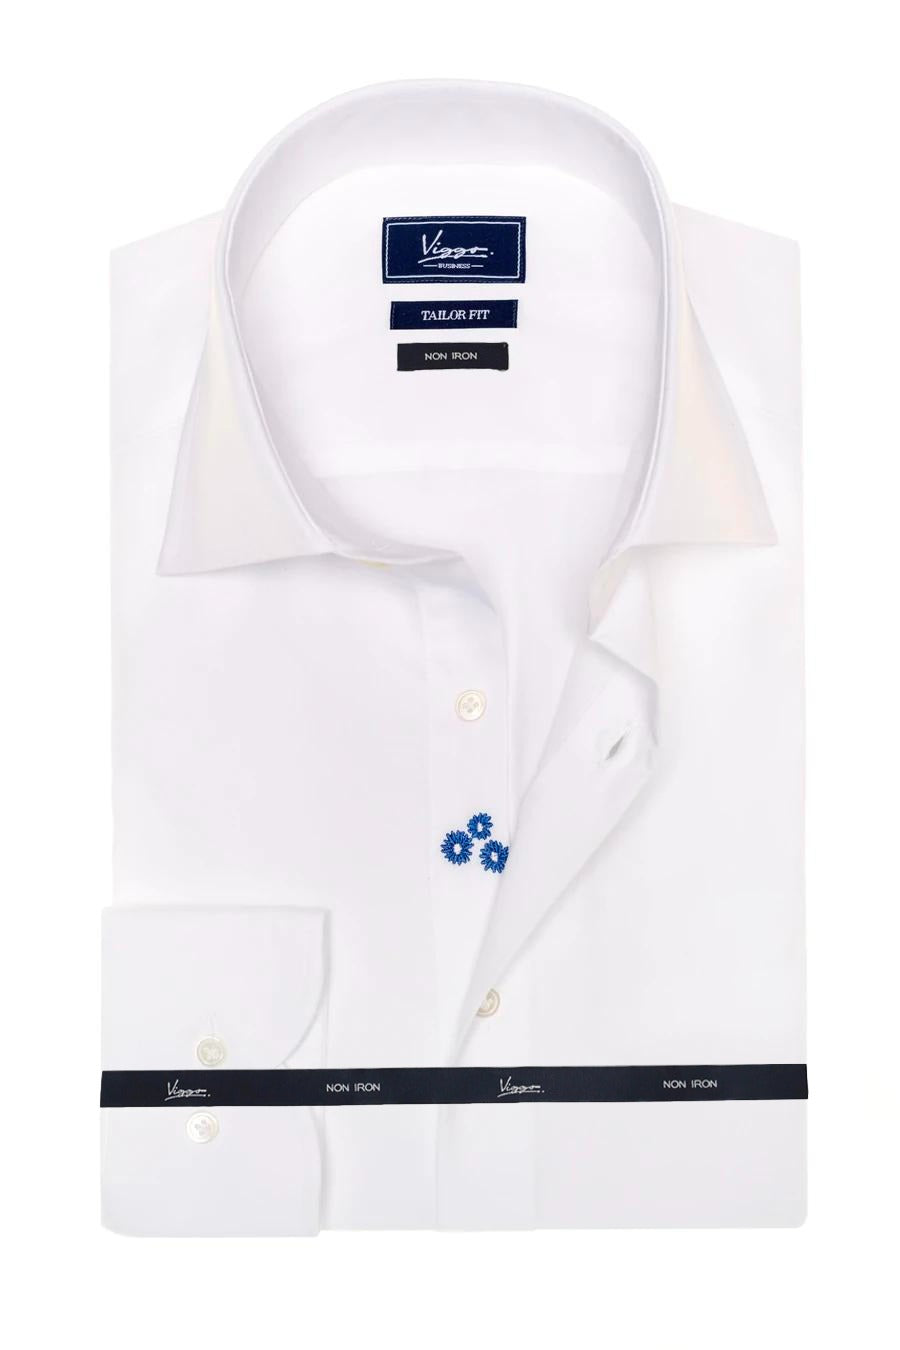 White non-iron shirt with hidden blue flower